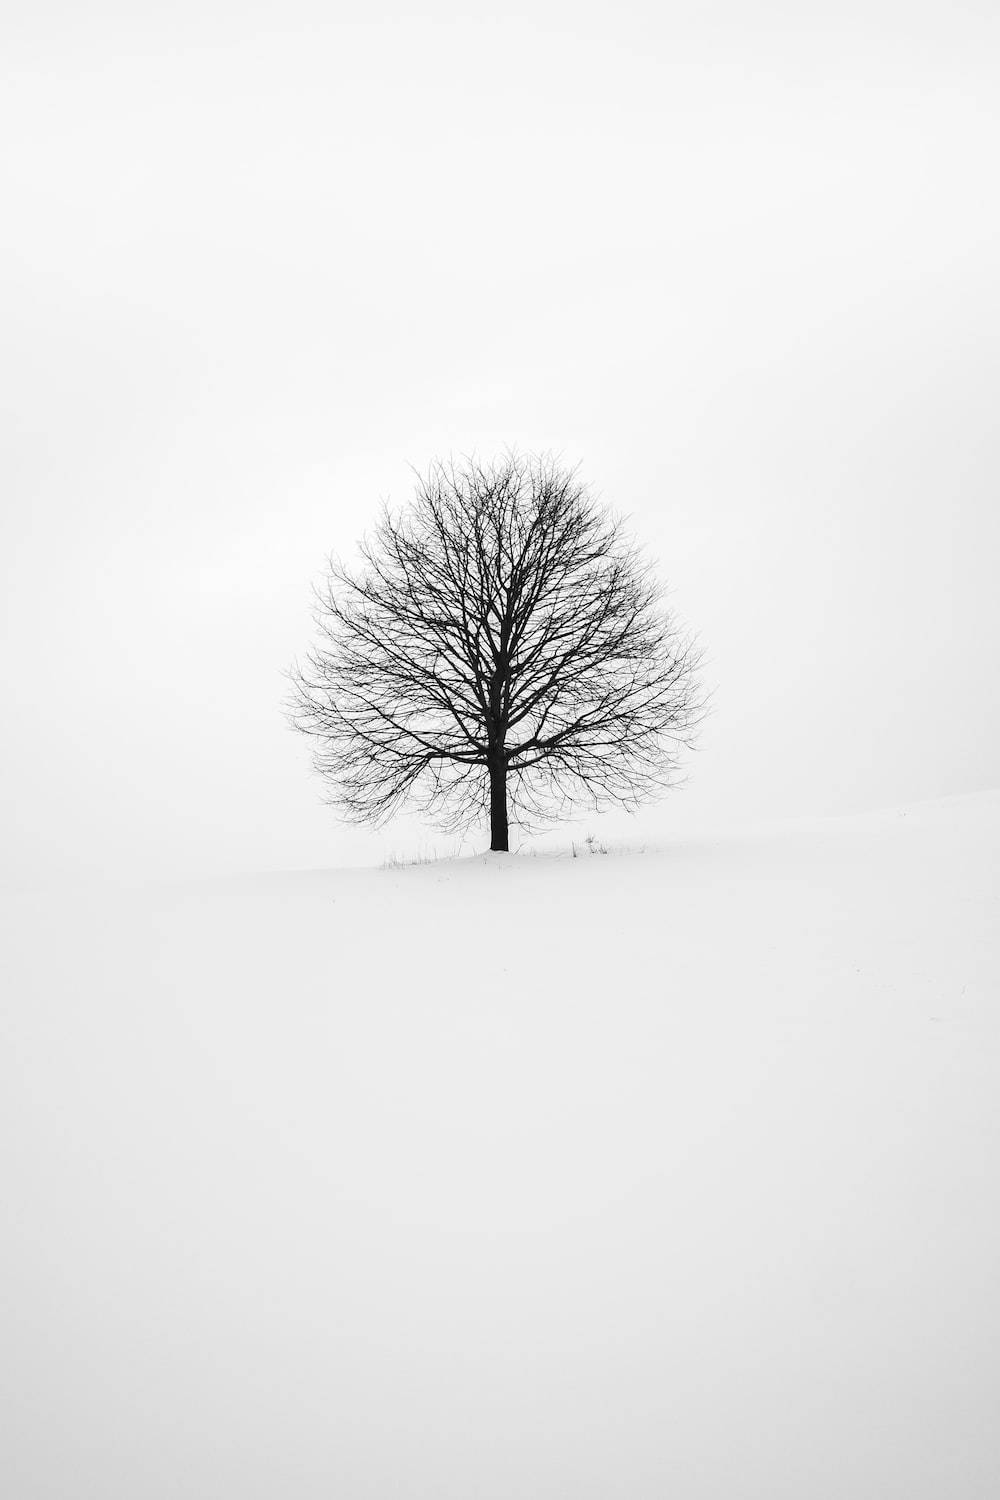 Small Black Tree On Plain White Background